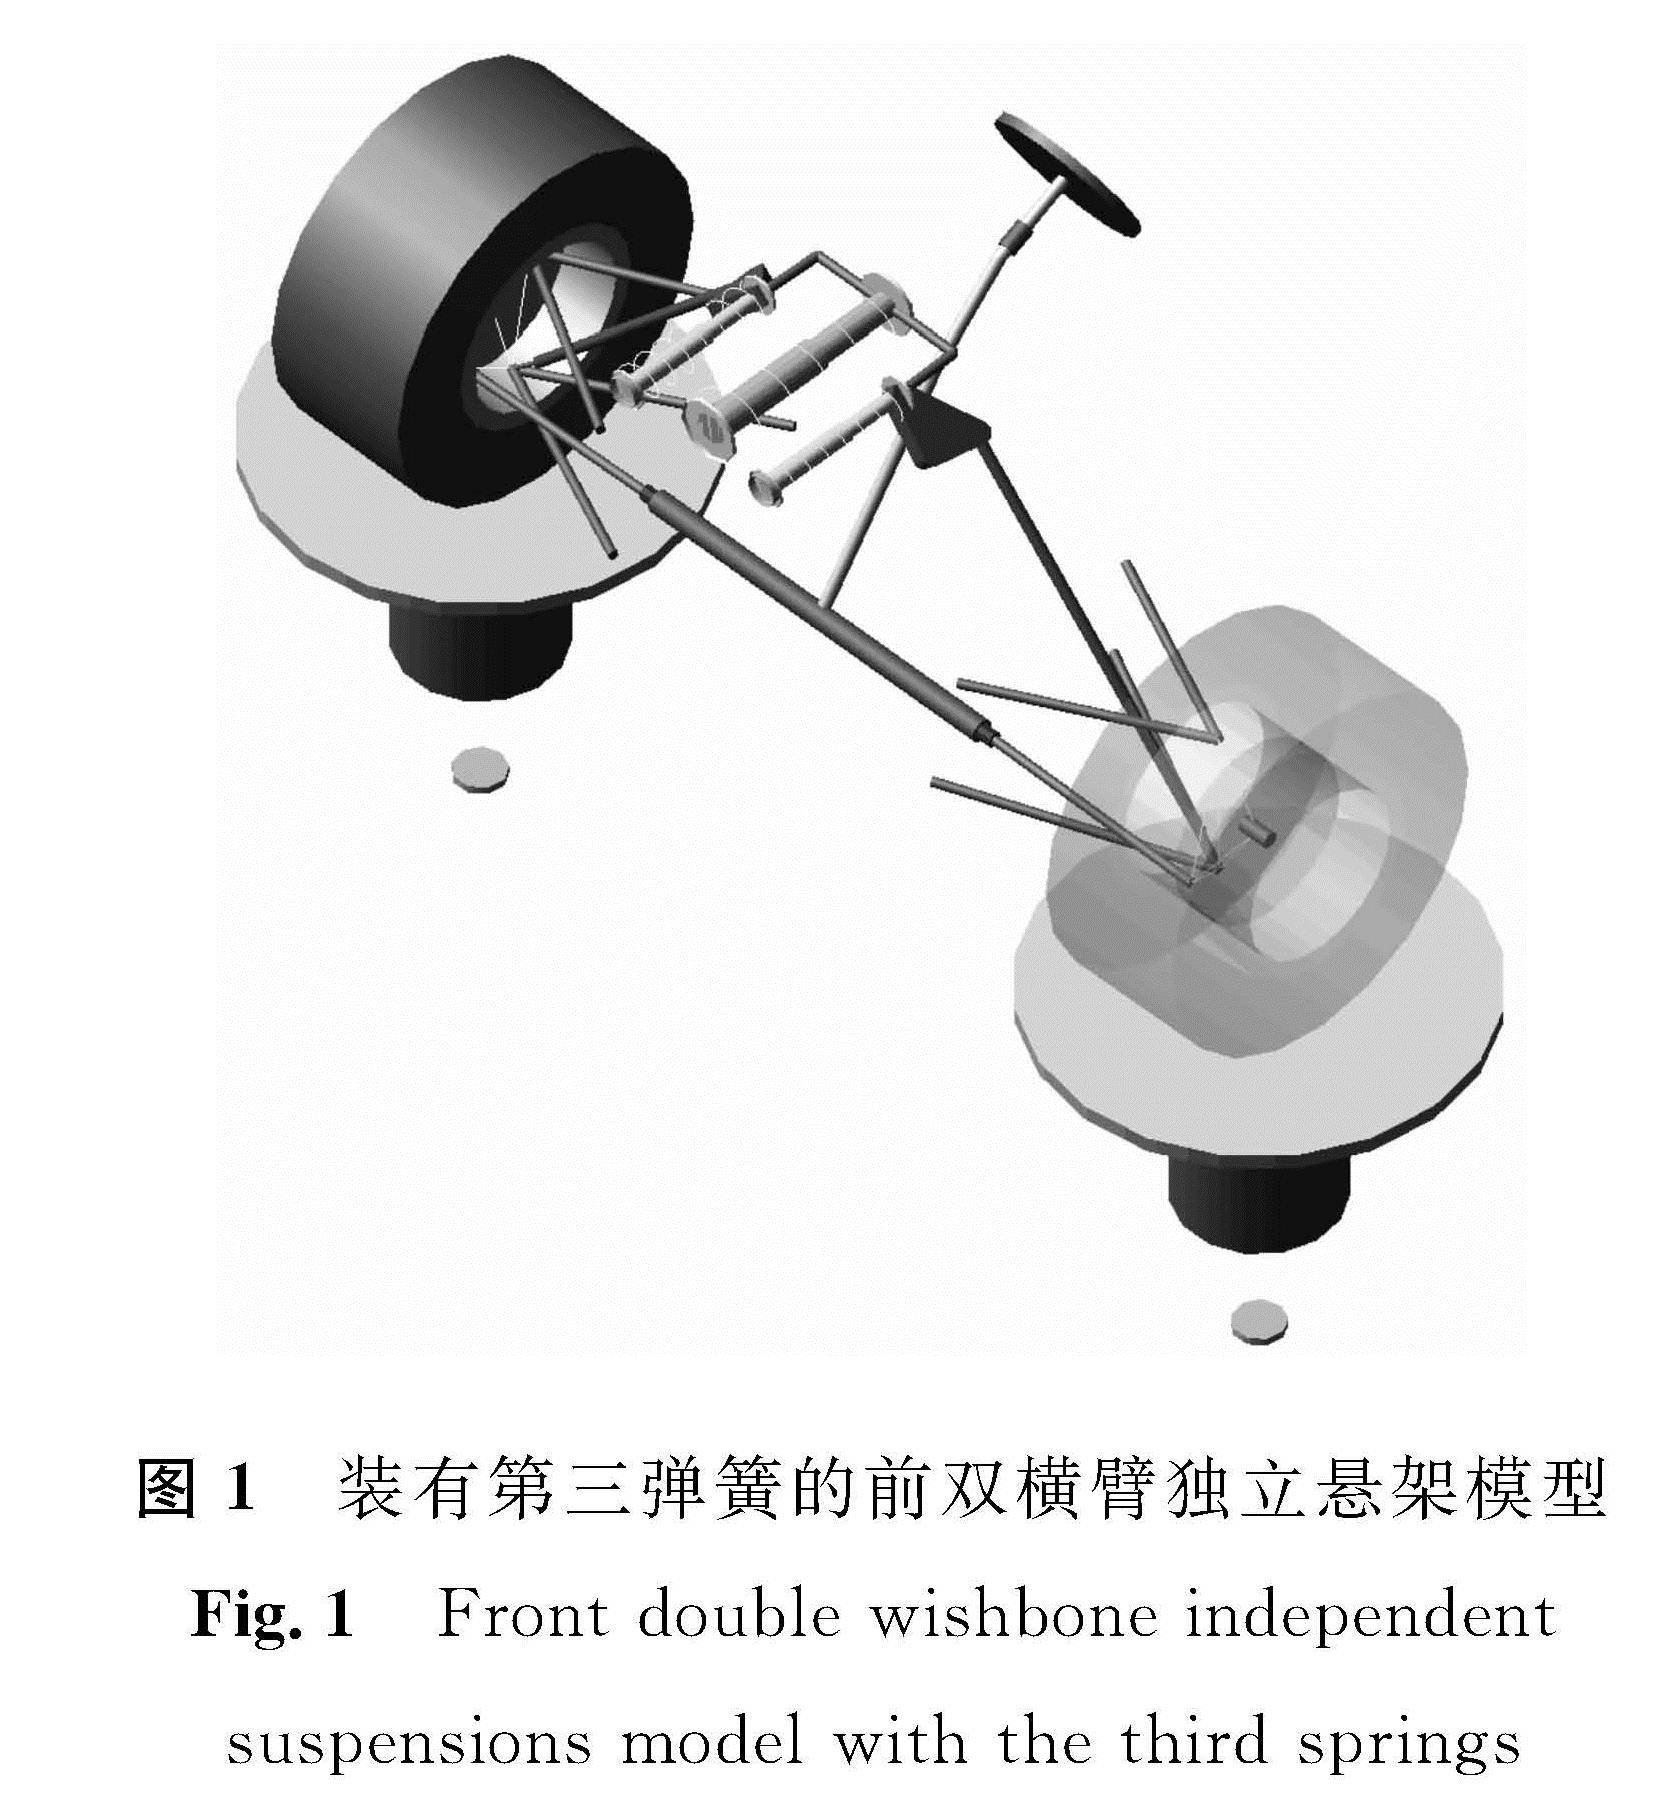 图1 装有第三弹簧的前双横臂独立悬架模型<br/>Fig.1 Front double wishbone independent suspensions model with the third springs